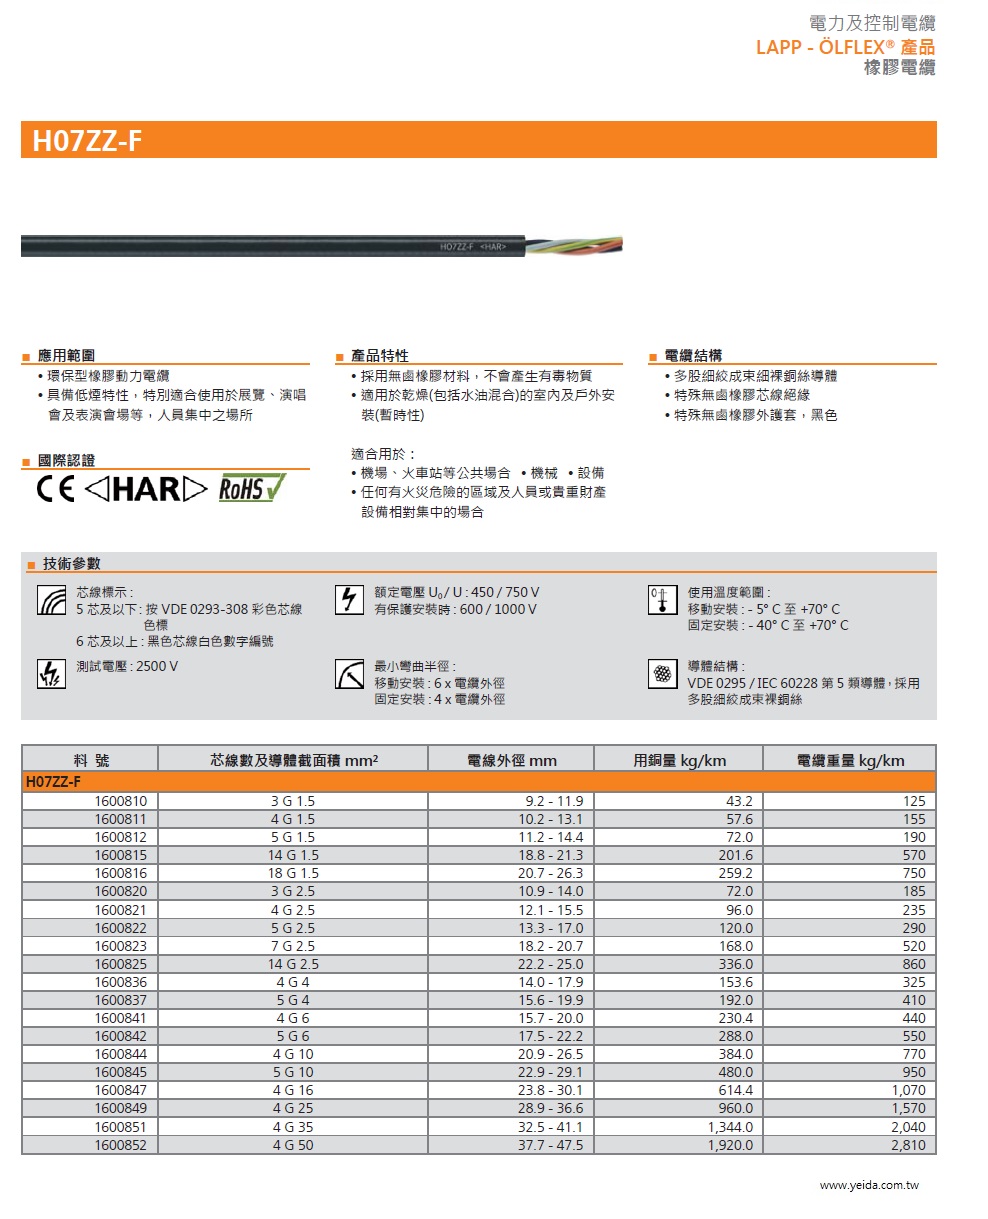 H07ZZ-F 450 / 750 V , - 40° C 至 +70° C 電力及控制環保型橡膠電纜產品圖